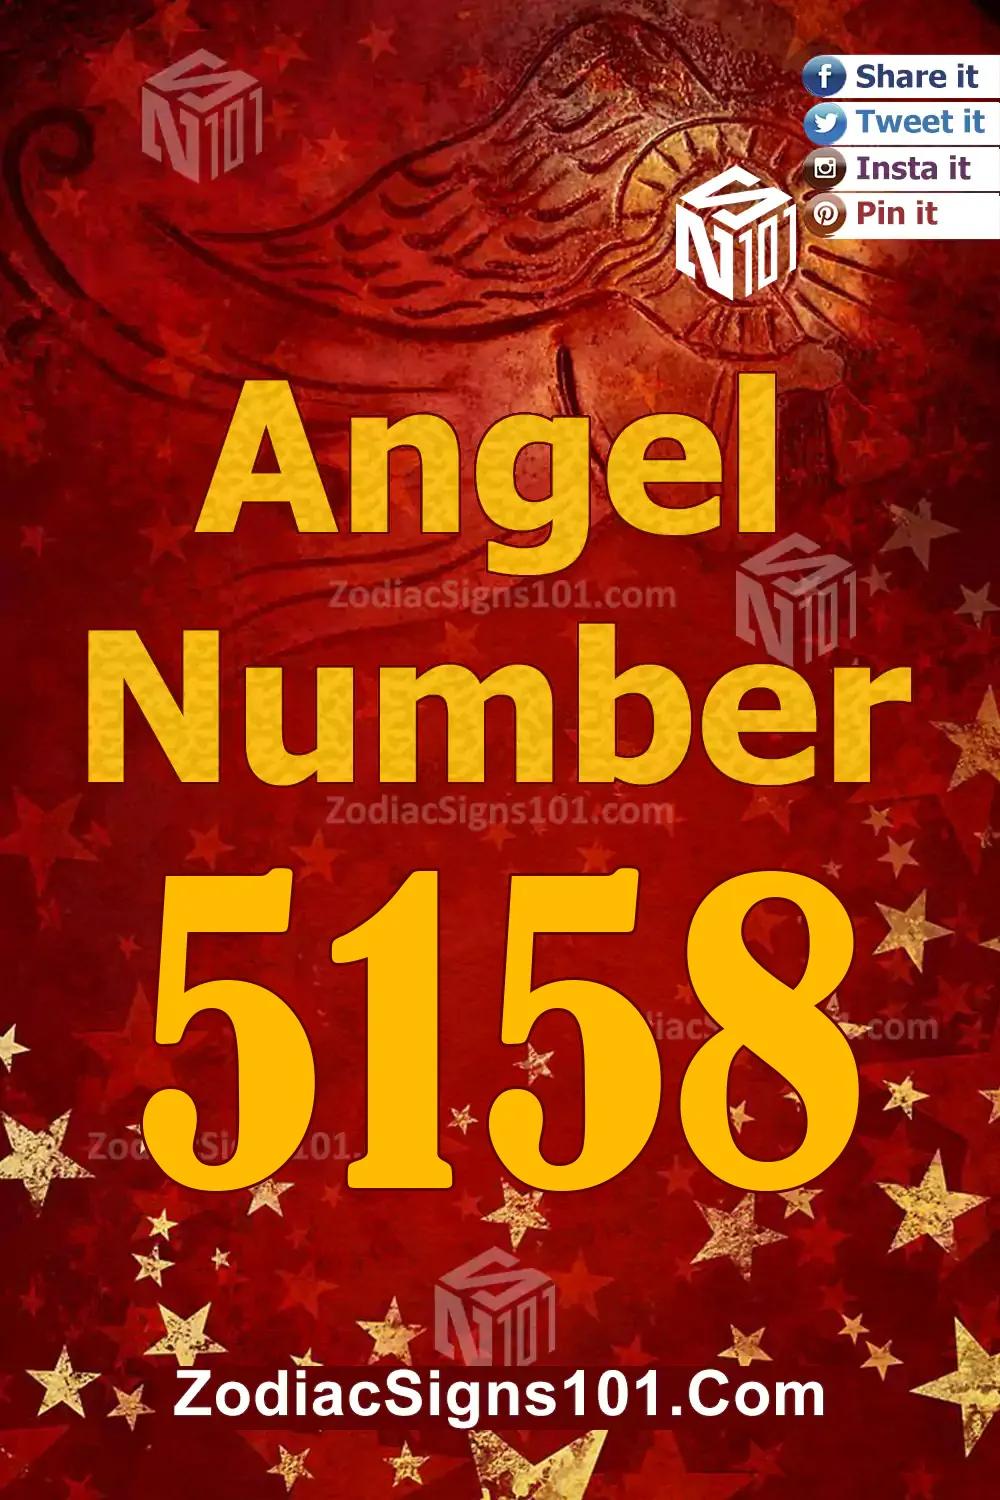 5158-Angel-Number-Meaning.jpg